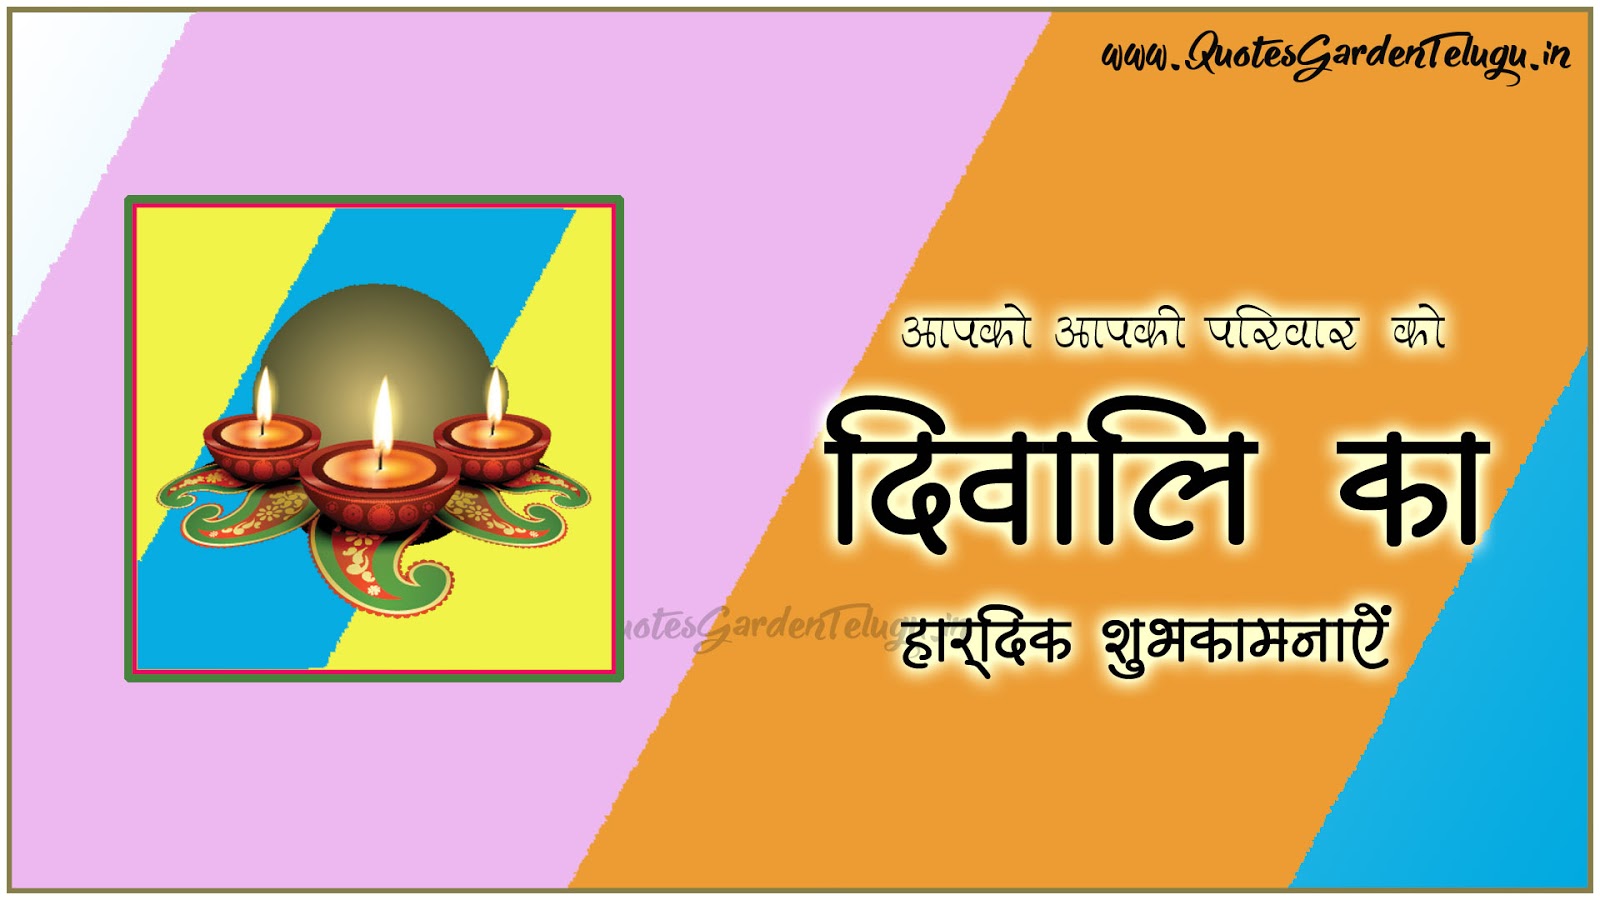 Happy diwali 2017 greetings messages in hindi | QUOTES GARDEN TELUGU |  Telugu Quotes | English Quotes | Hindi Quotes |